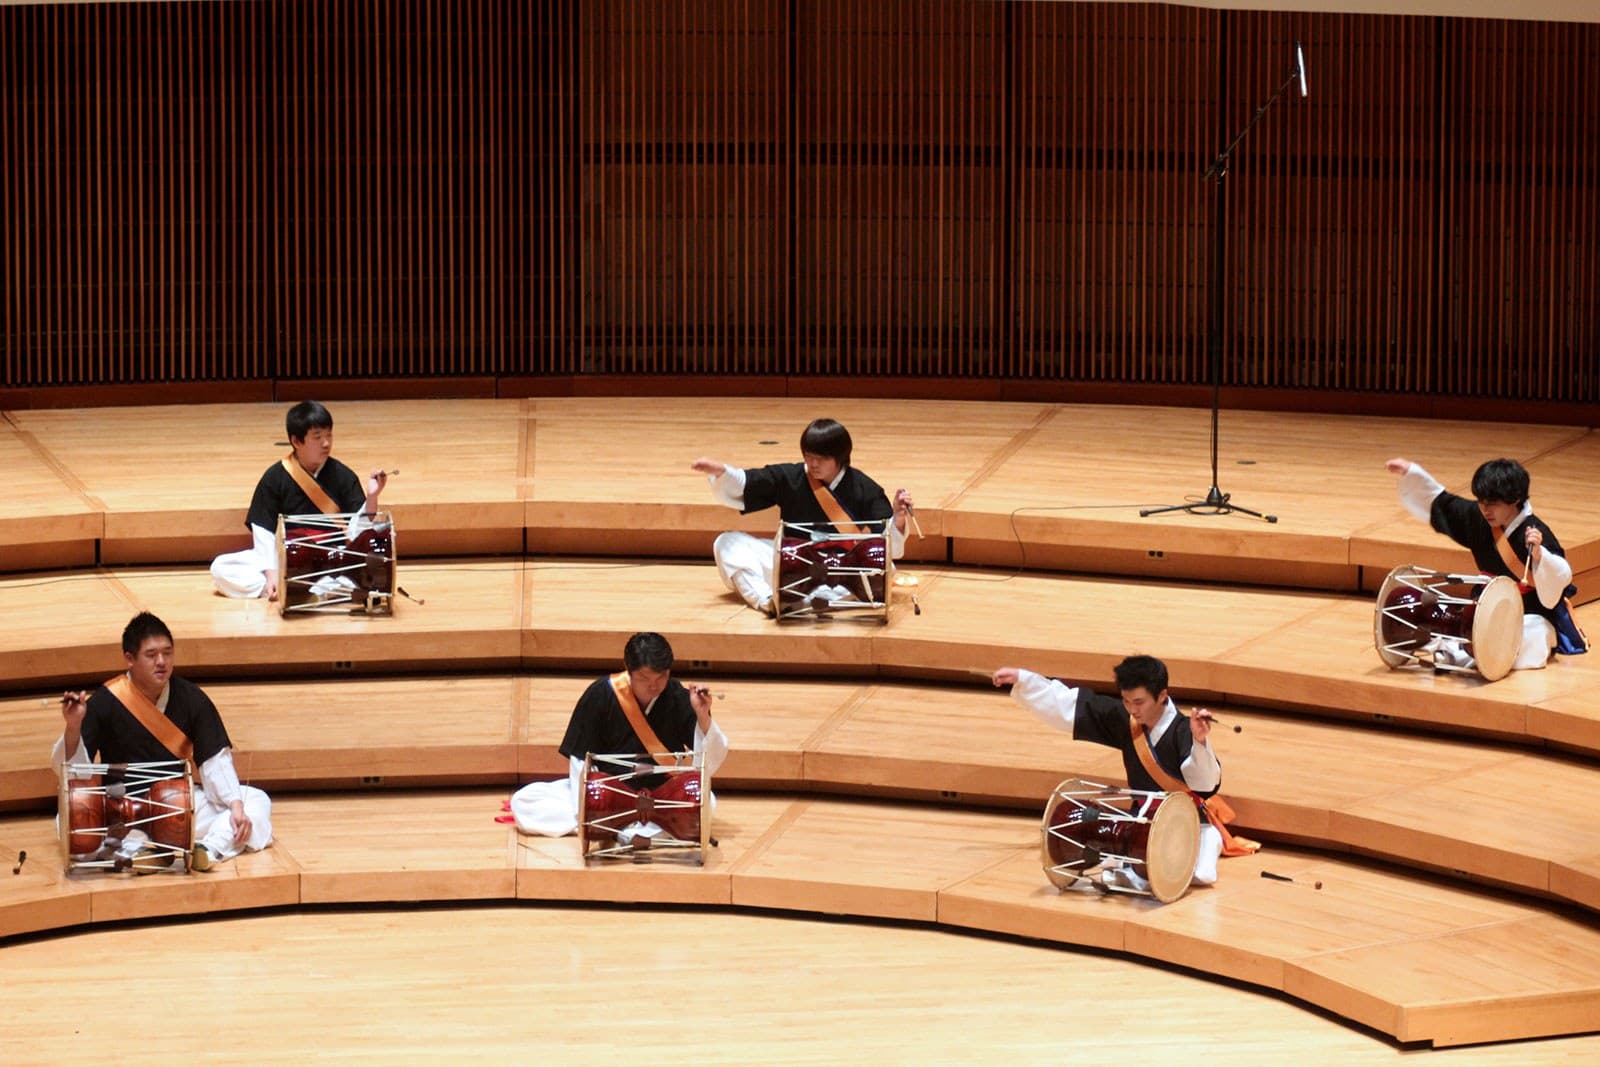 The UMD Korean Percussion Ensemble perform Korean folk music on stage.